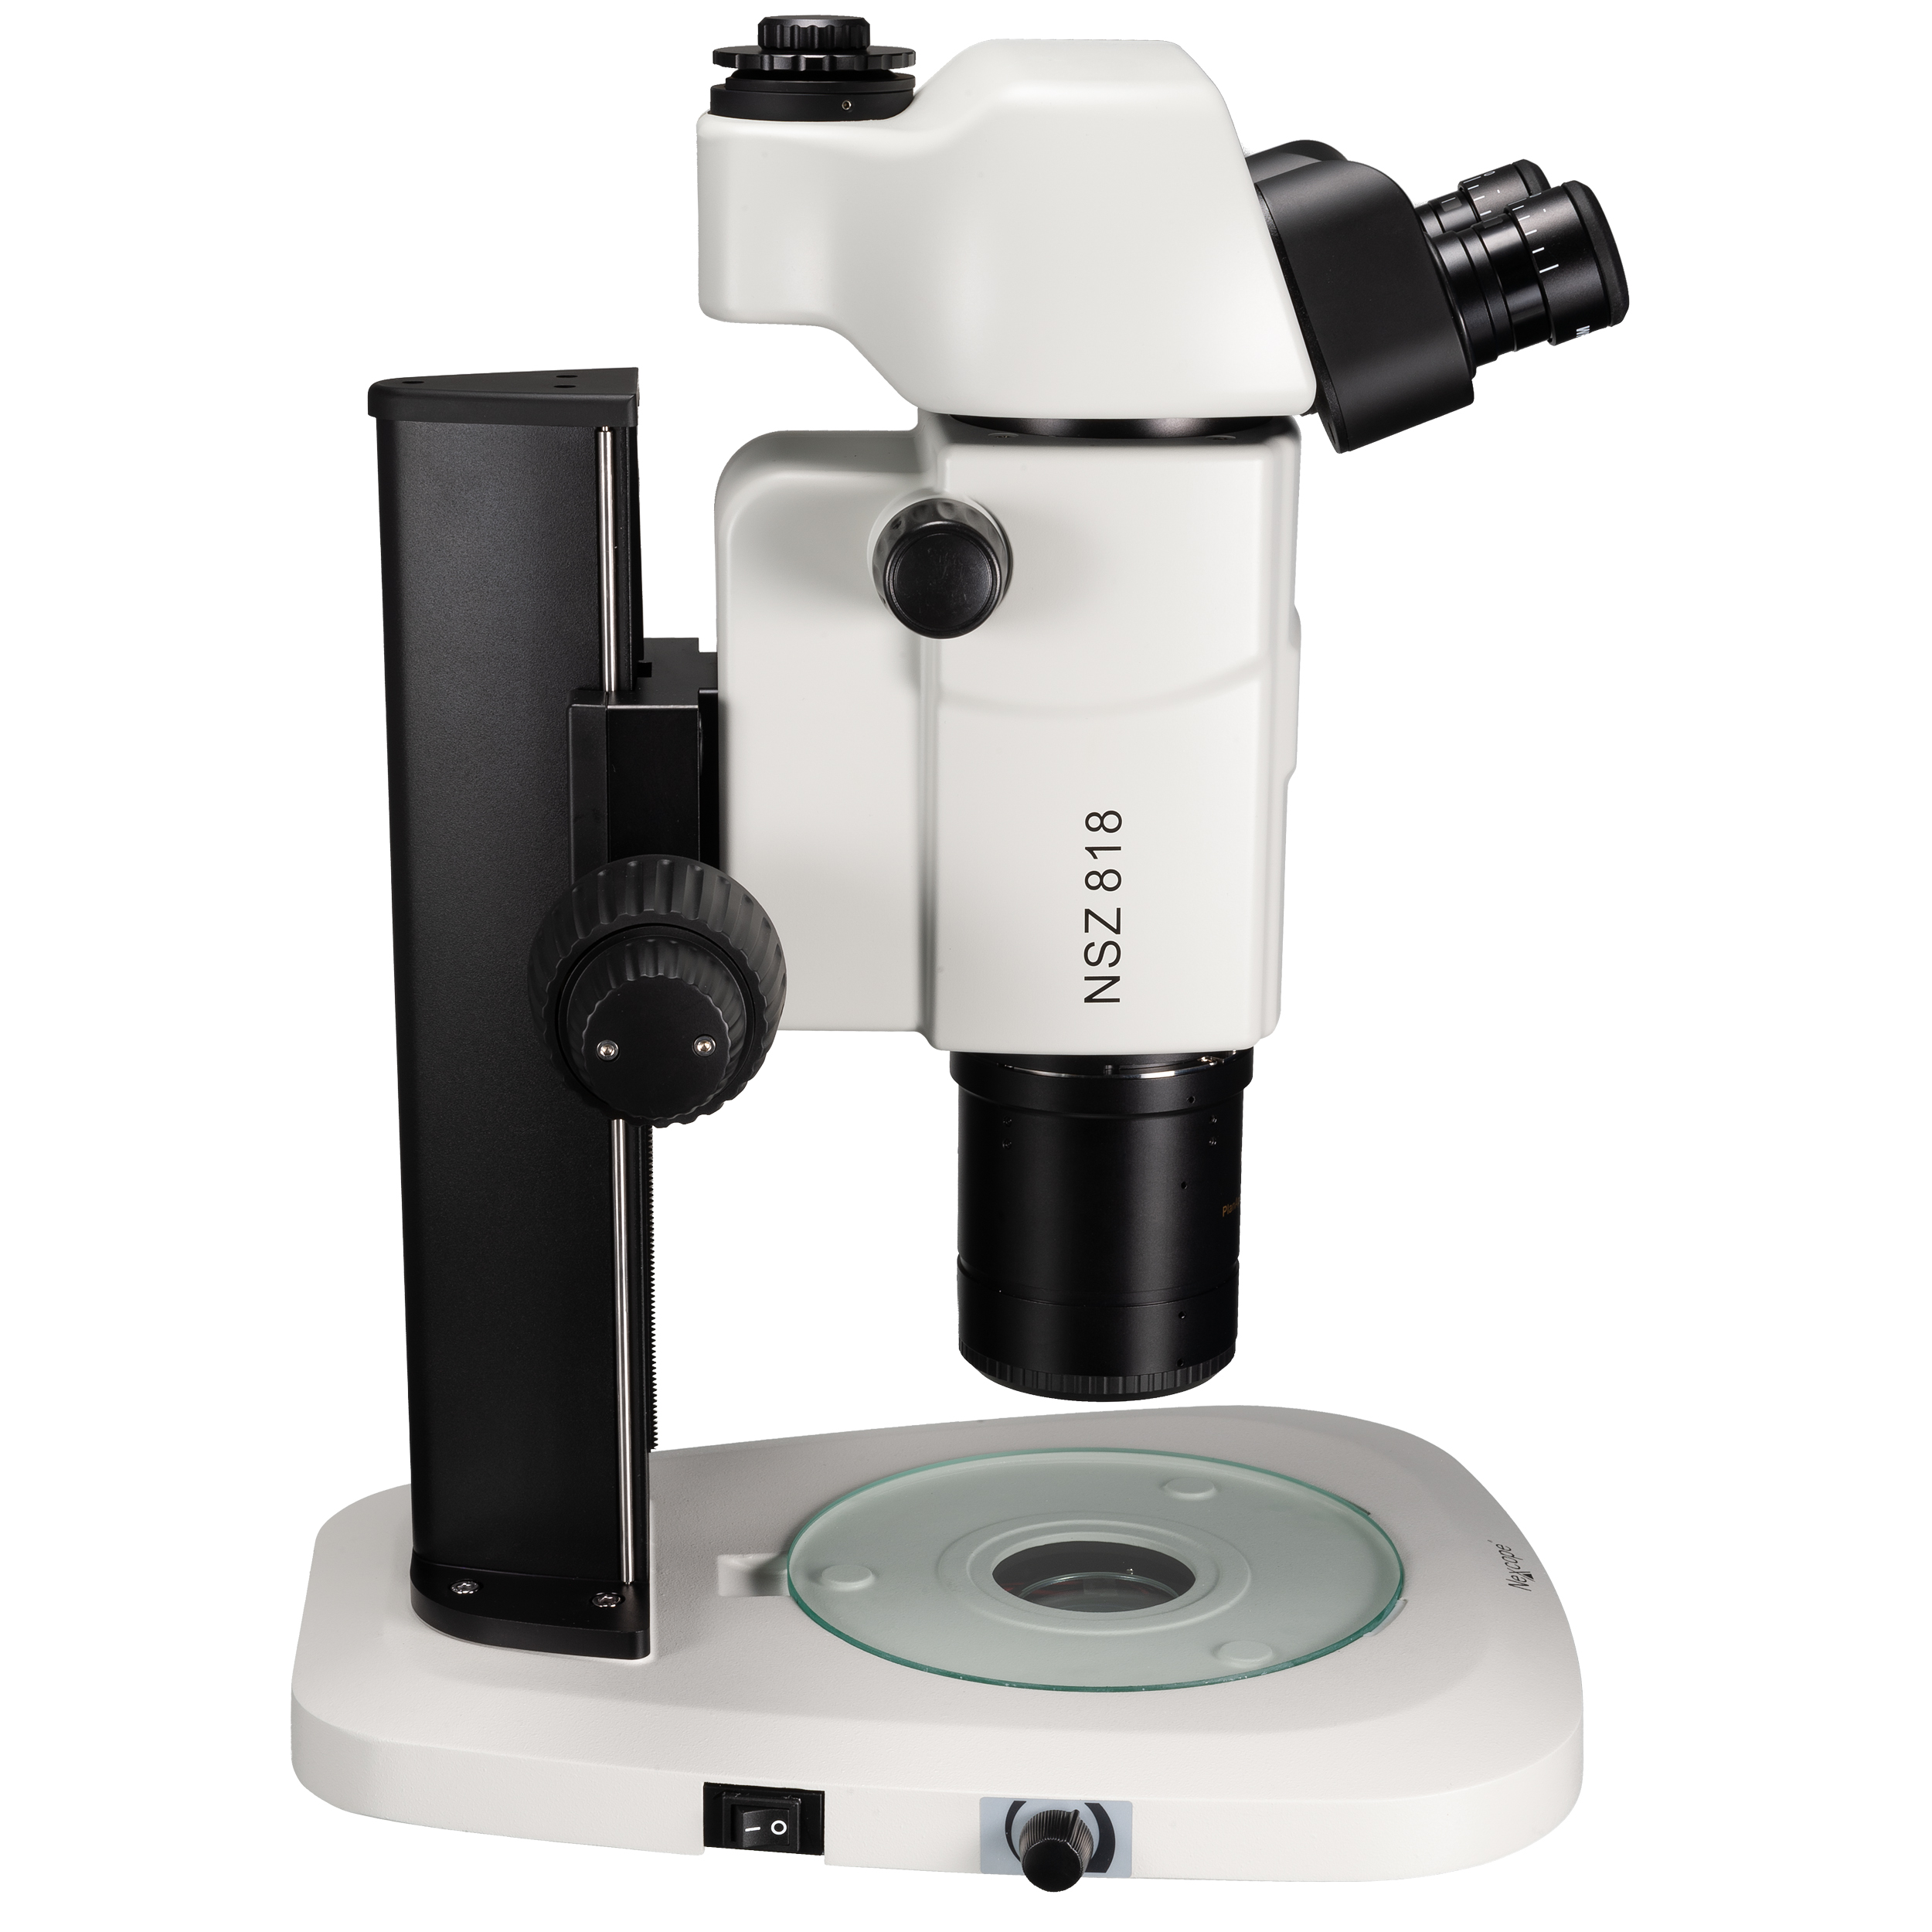 Nexcope NSZ818 professionelles Stereomikroskop mit 18:1 Zoom